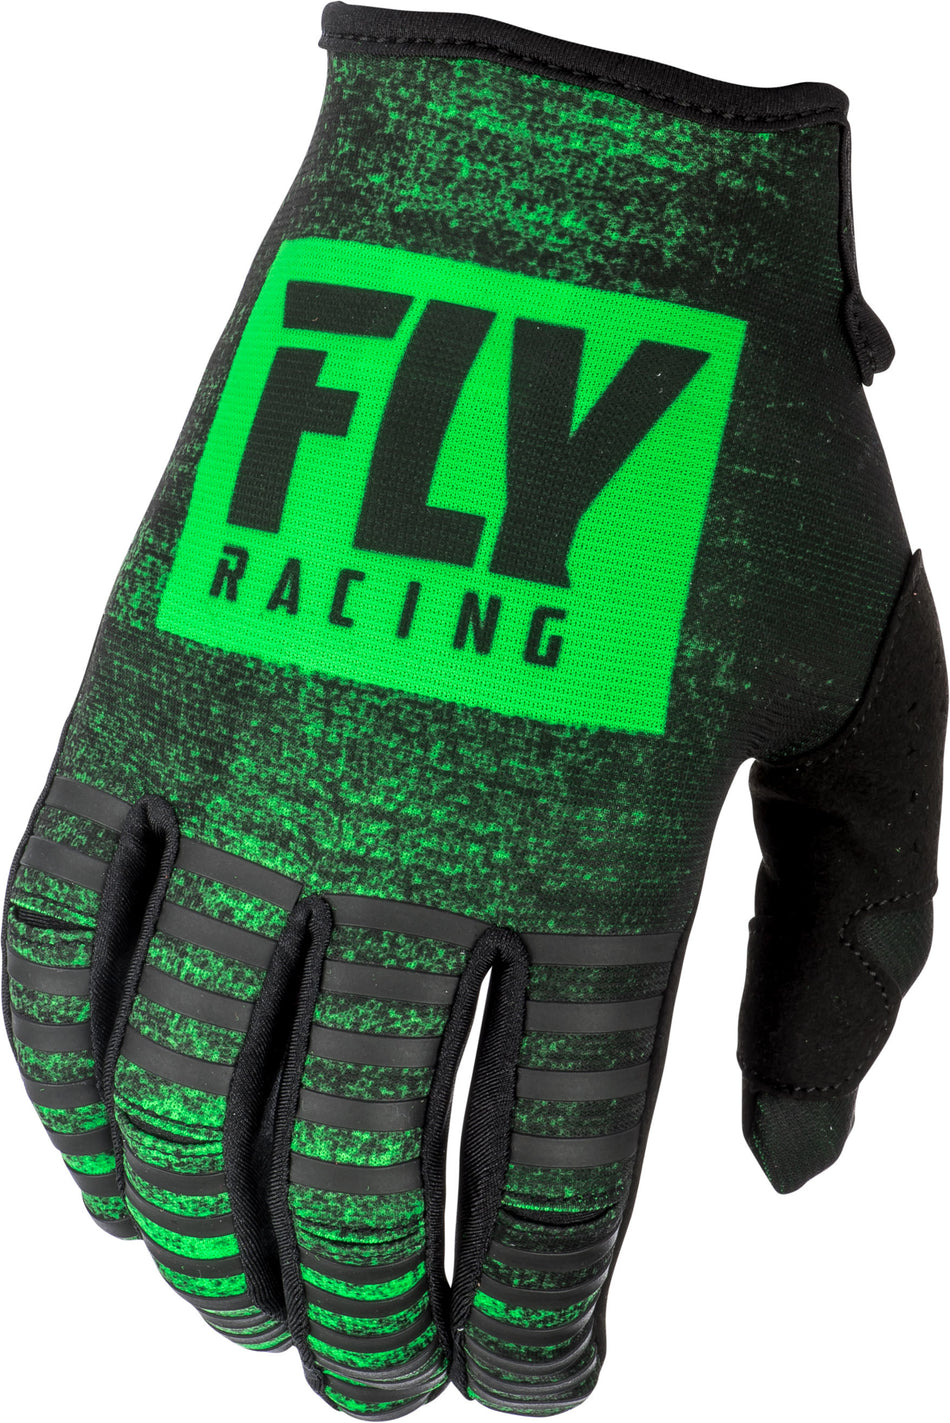 FLY RACING Kinetic Noiz Gloves Neon Green/Black Sz 08 372-51508